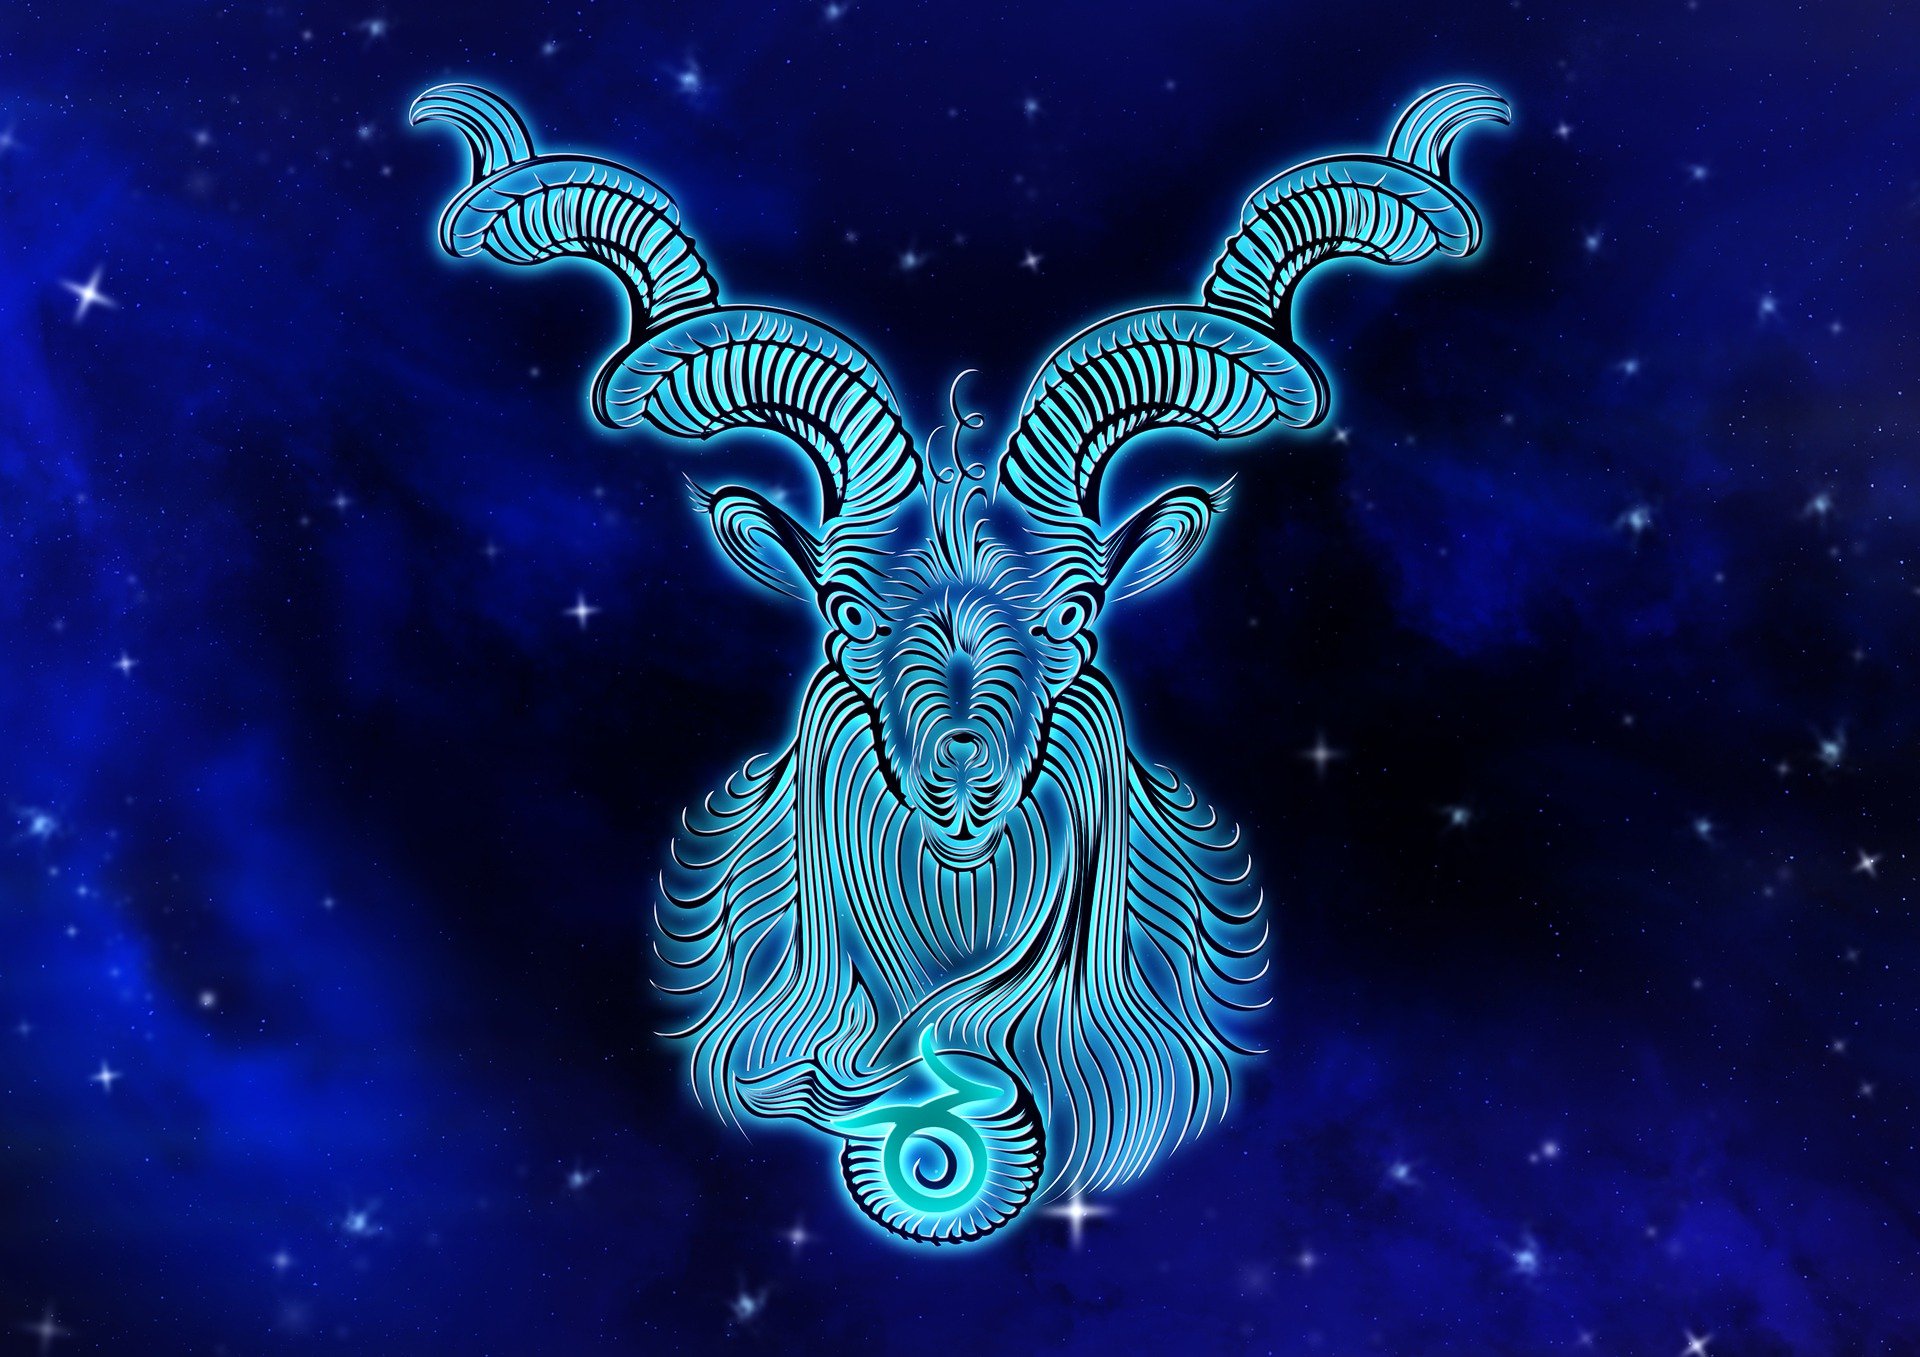 An illustration of a Capricorn star sign | Source: Pixabay 